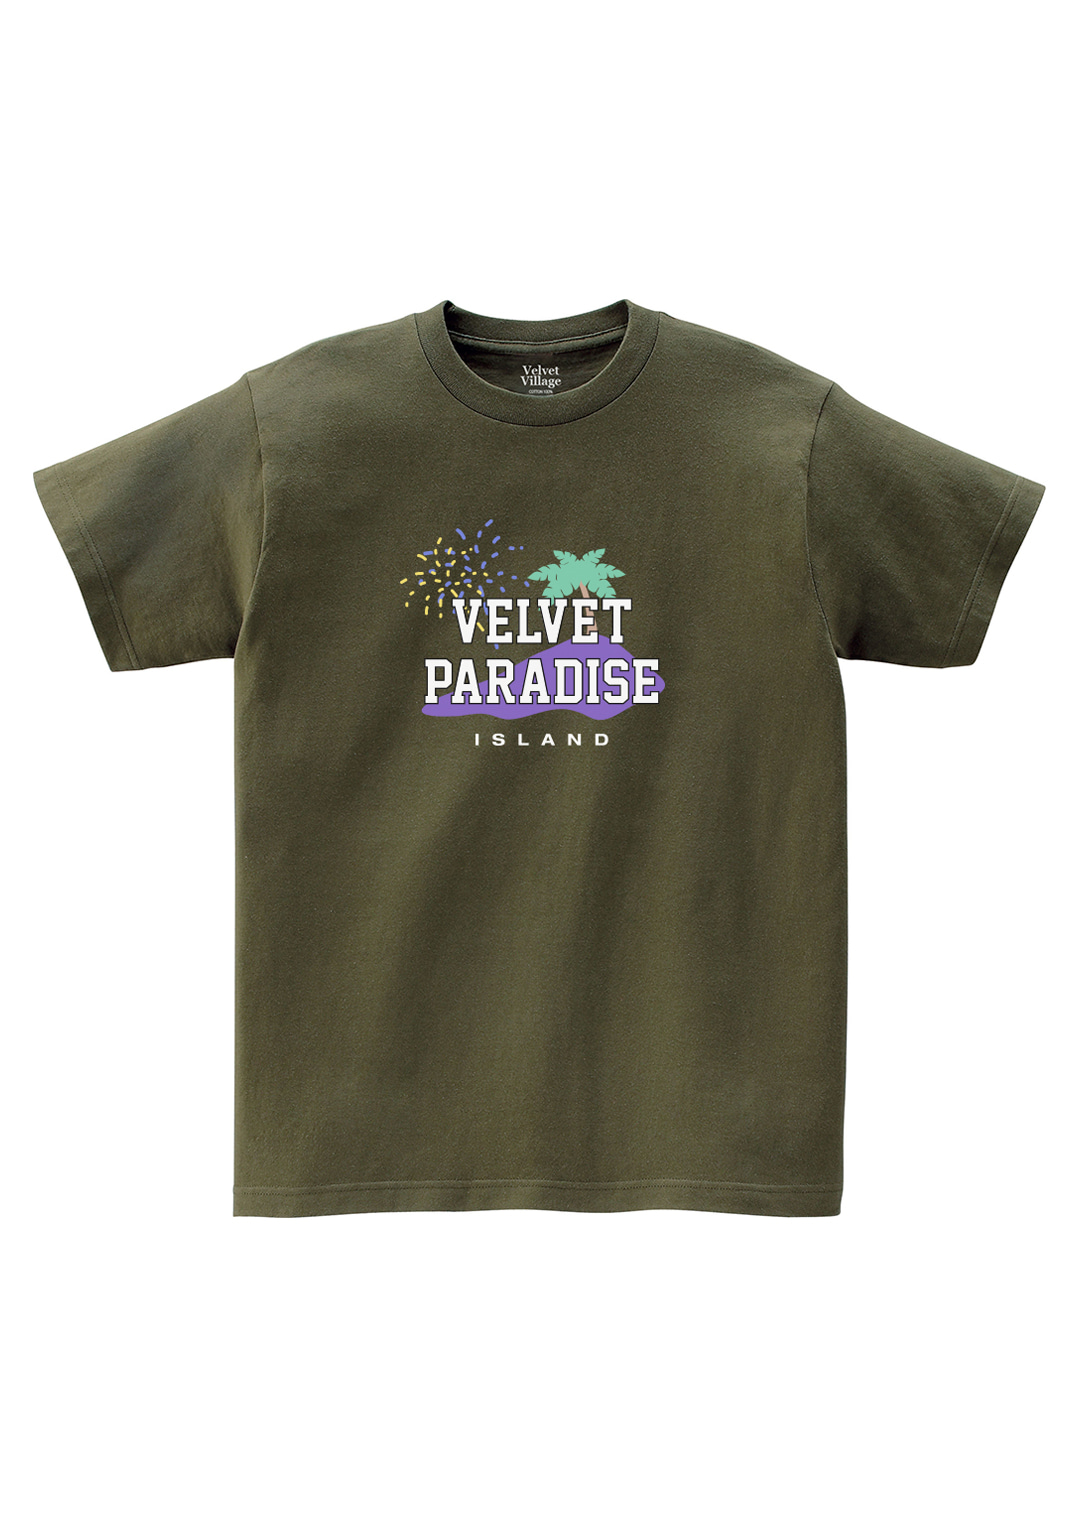 Velvet Paradise T-shirt (Khaki)